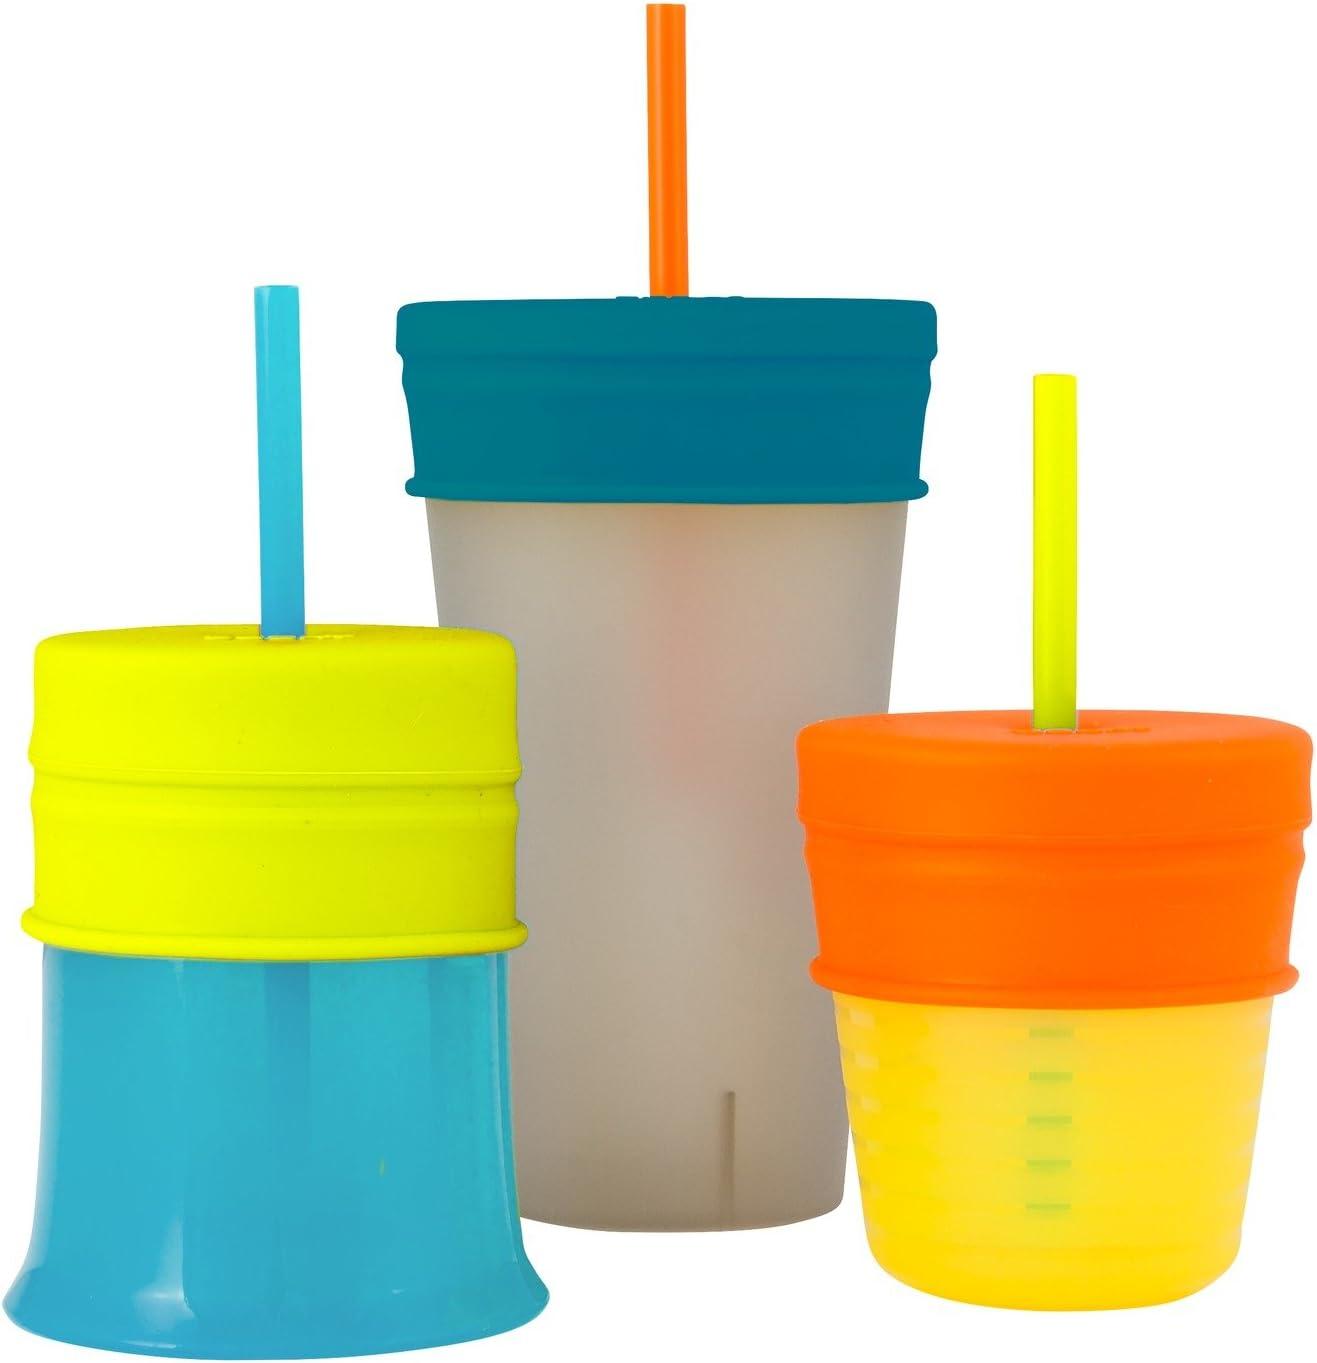 Boon SNUG Straw with Cup Blue/Orange/Green Blue/Orange/Green Cup w